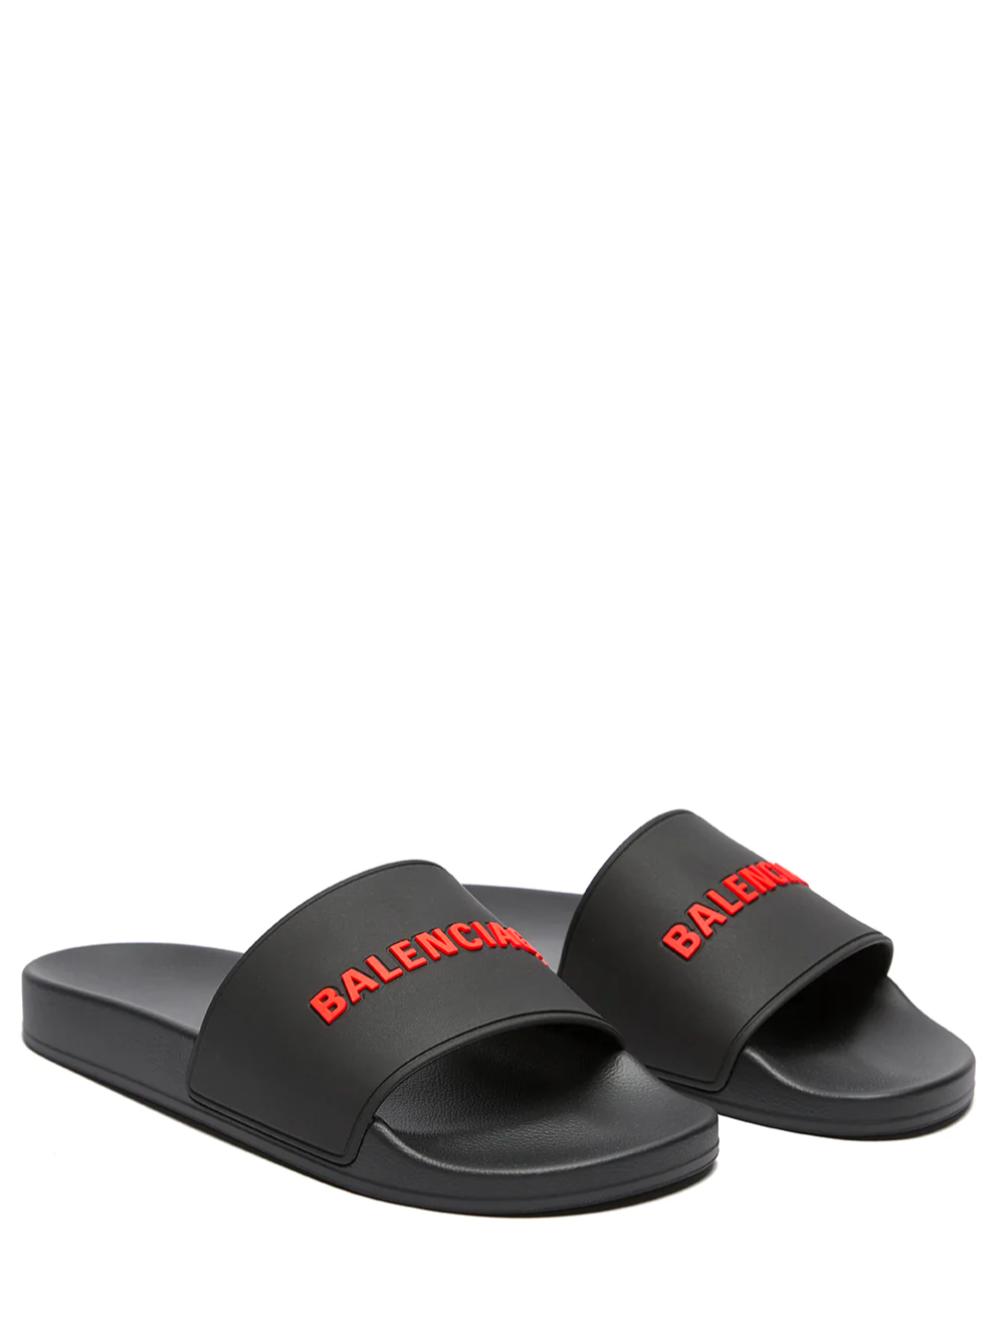 Balenciaga Pool Slides Black/red for Men | Lyst